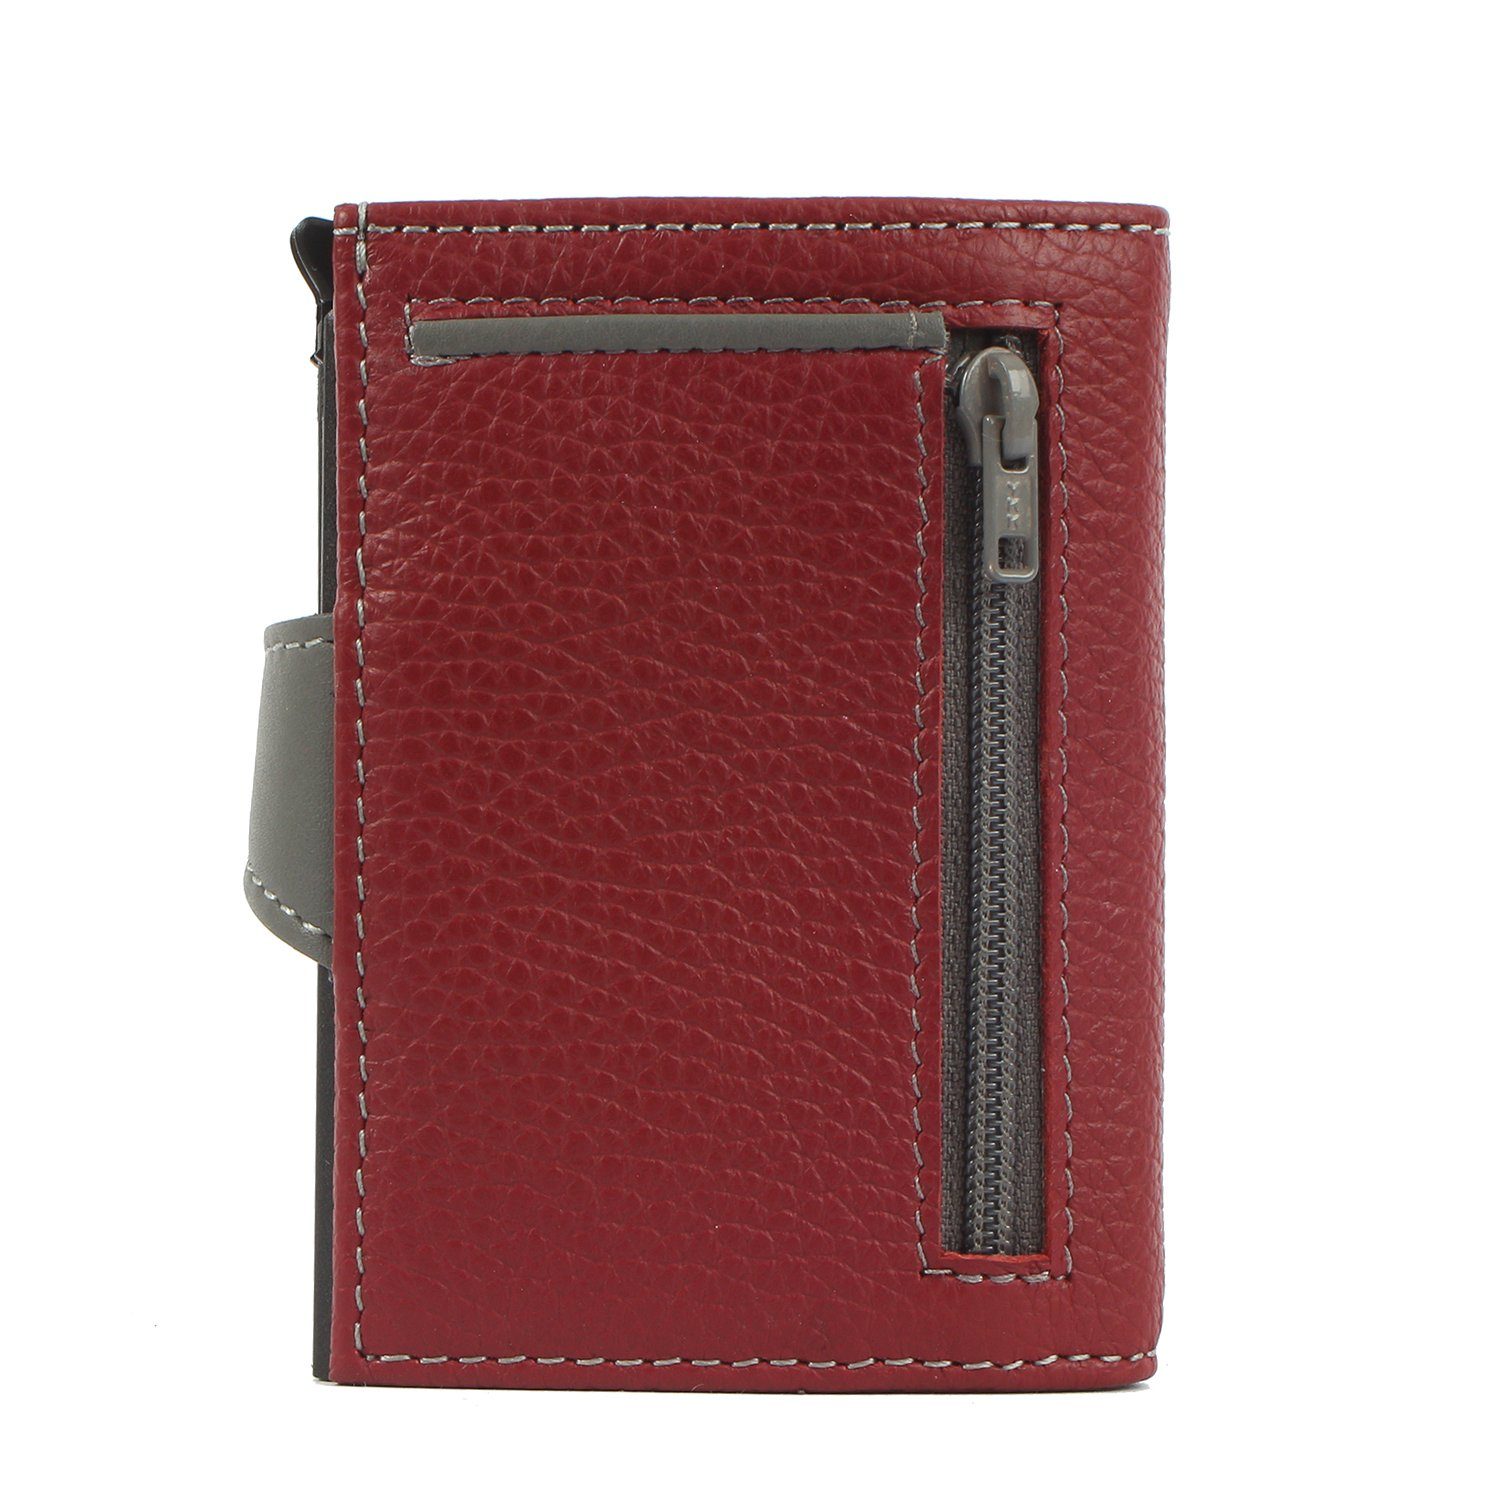 Margelisch Mini karminrot noonyu Kreditkartenbörse Upcycling RFID double Leder leather, aus Geldbörse